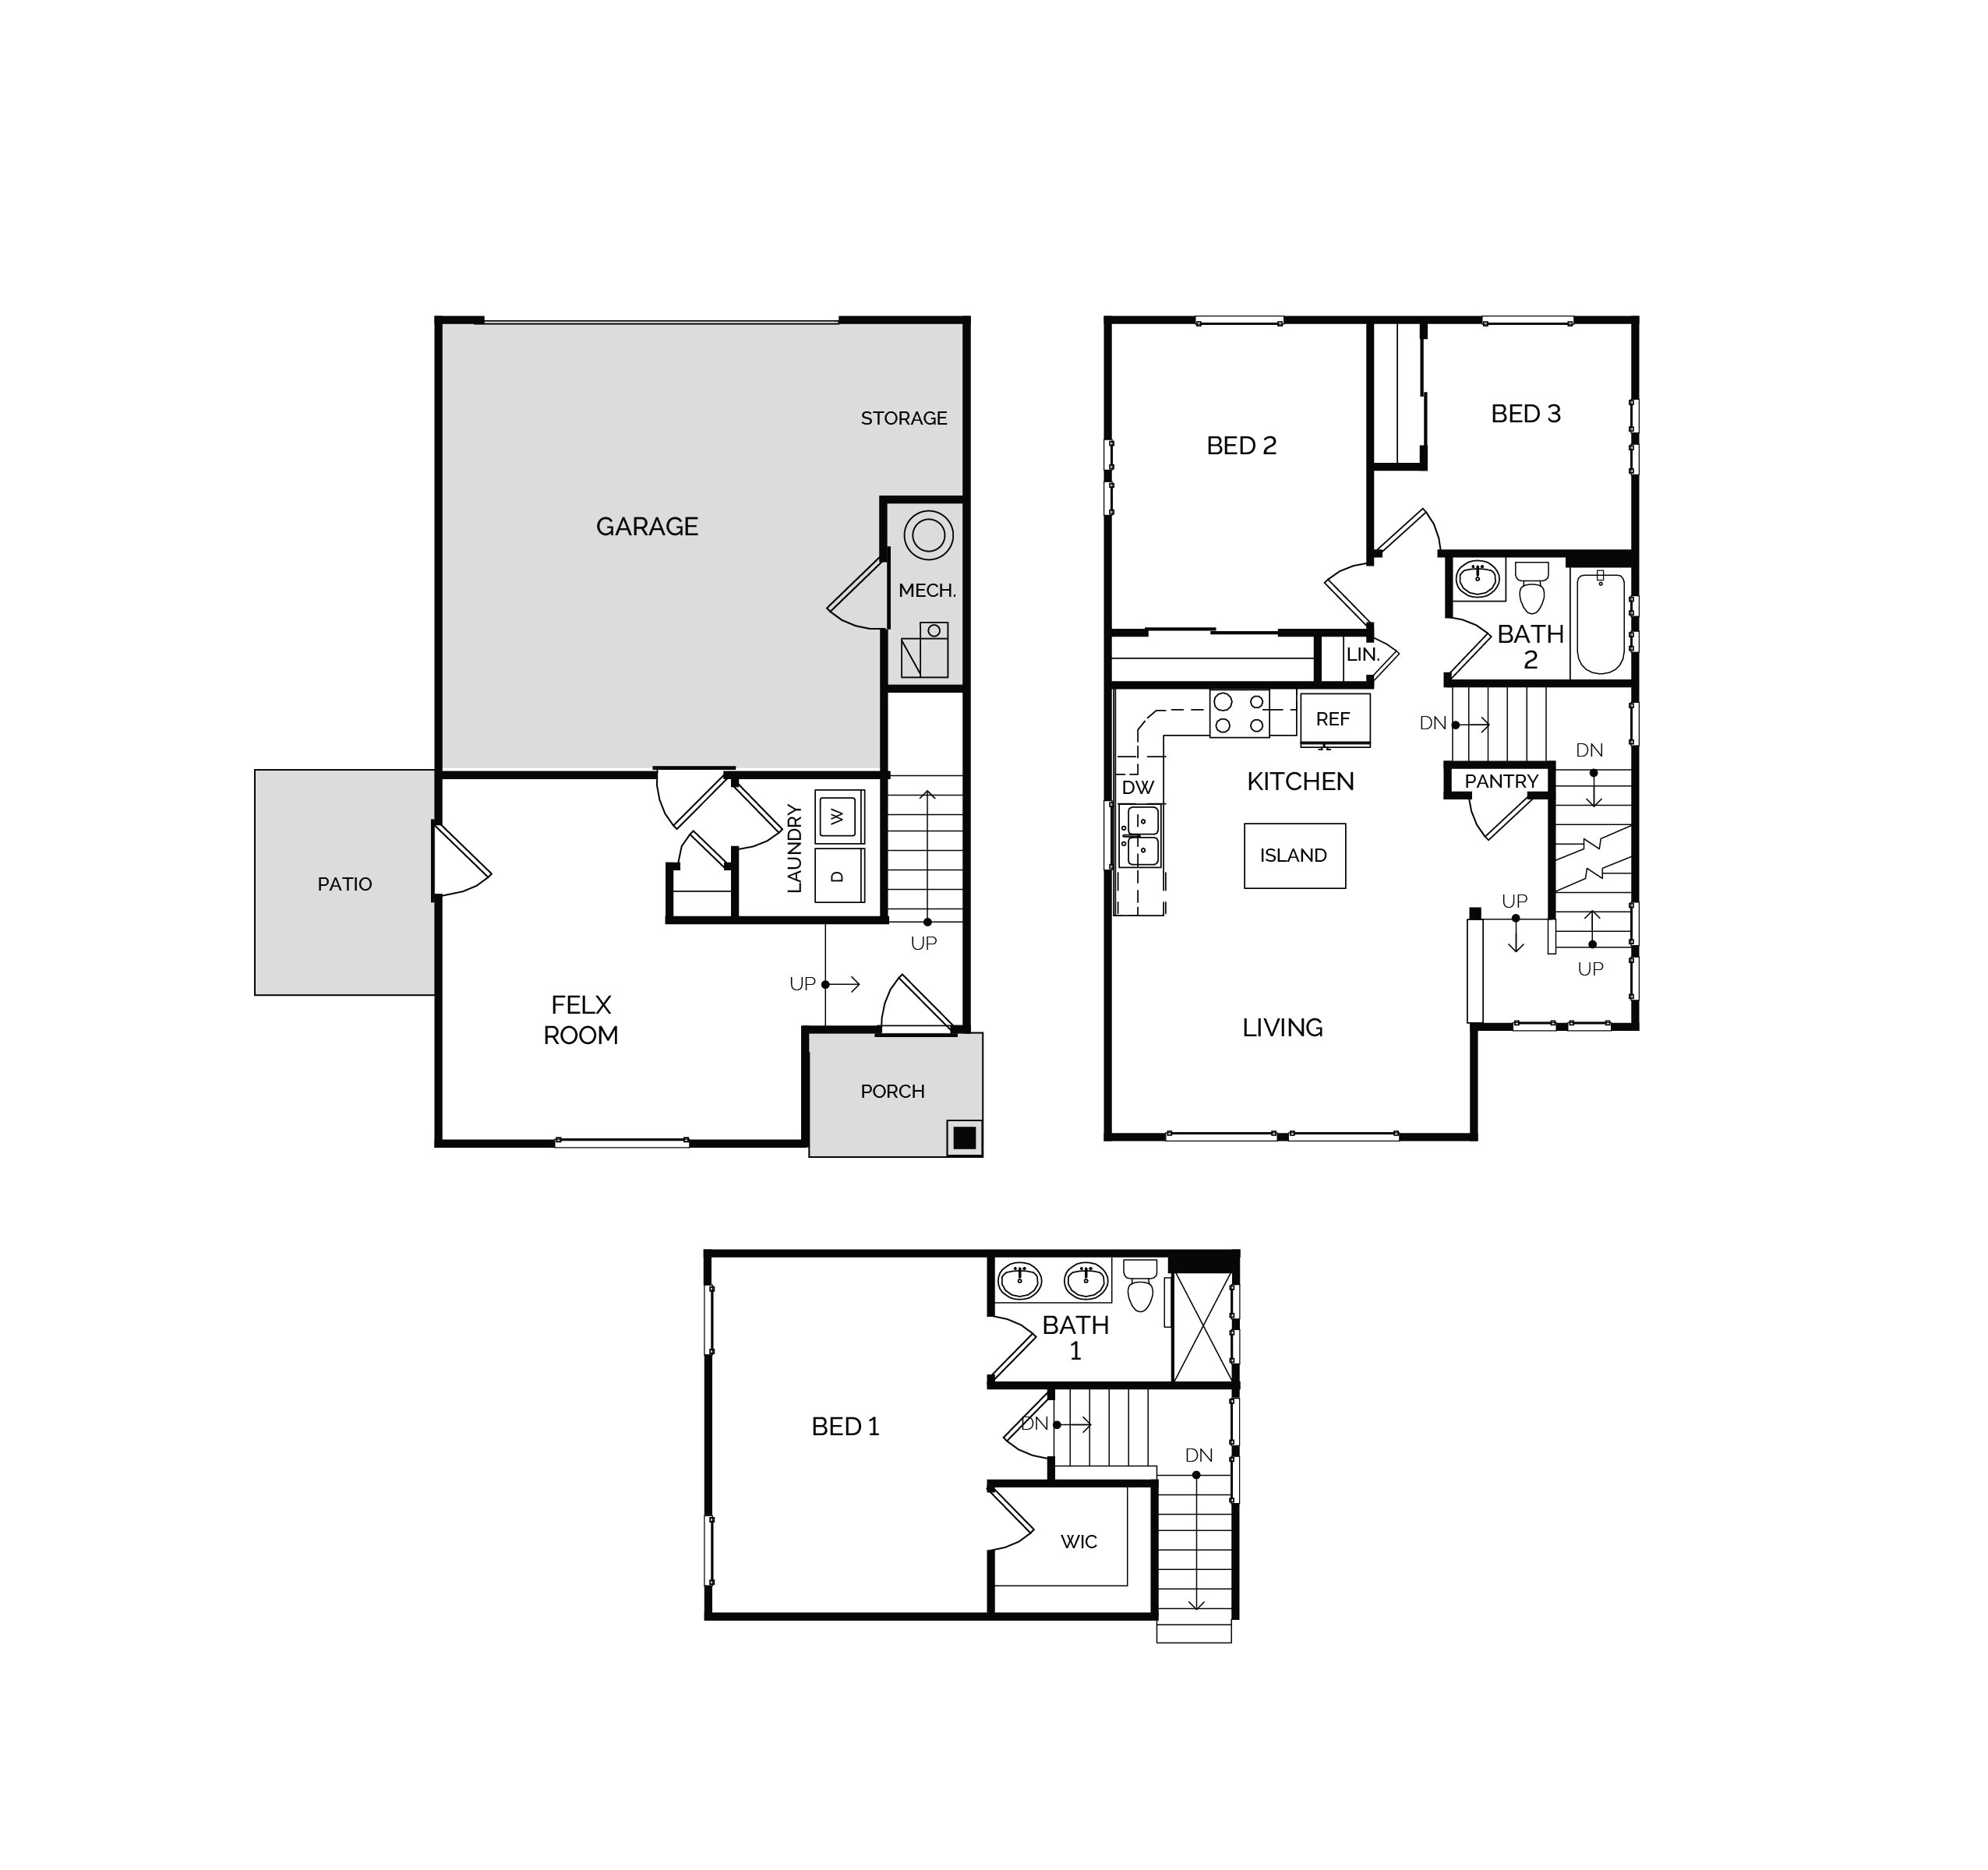 Floorplan: Name: C1-Rosa, Beds: 3, Baths: 2.0, Sqft: 1510